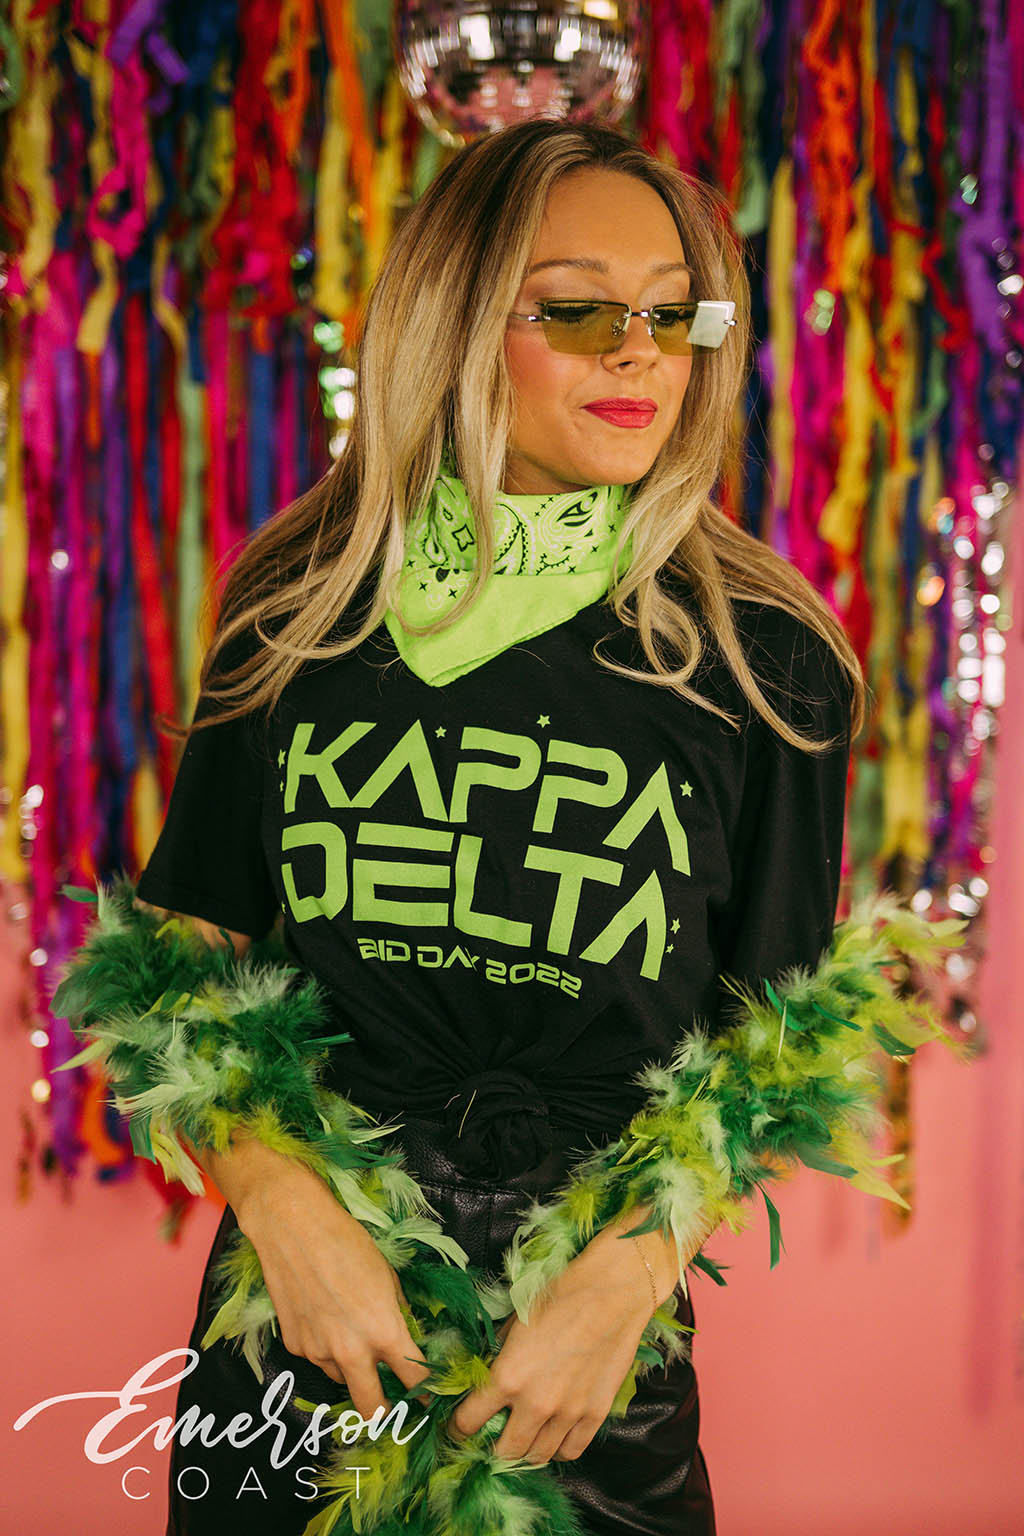 Kappa Delta Back to the Future Bid Day Tee